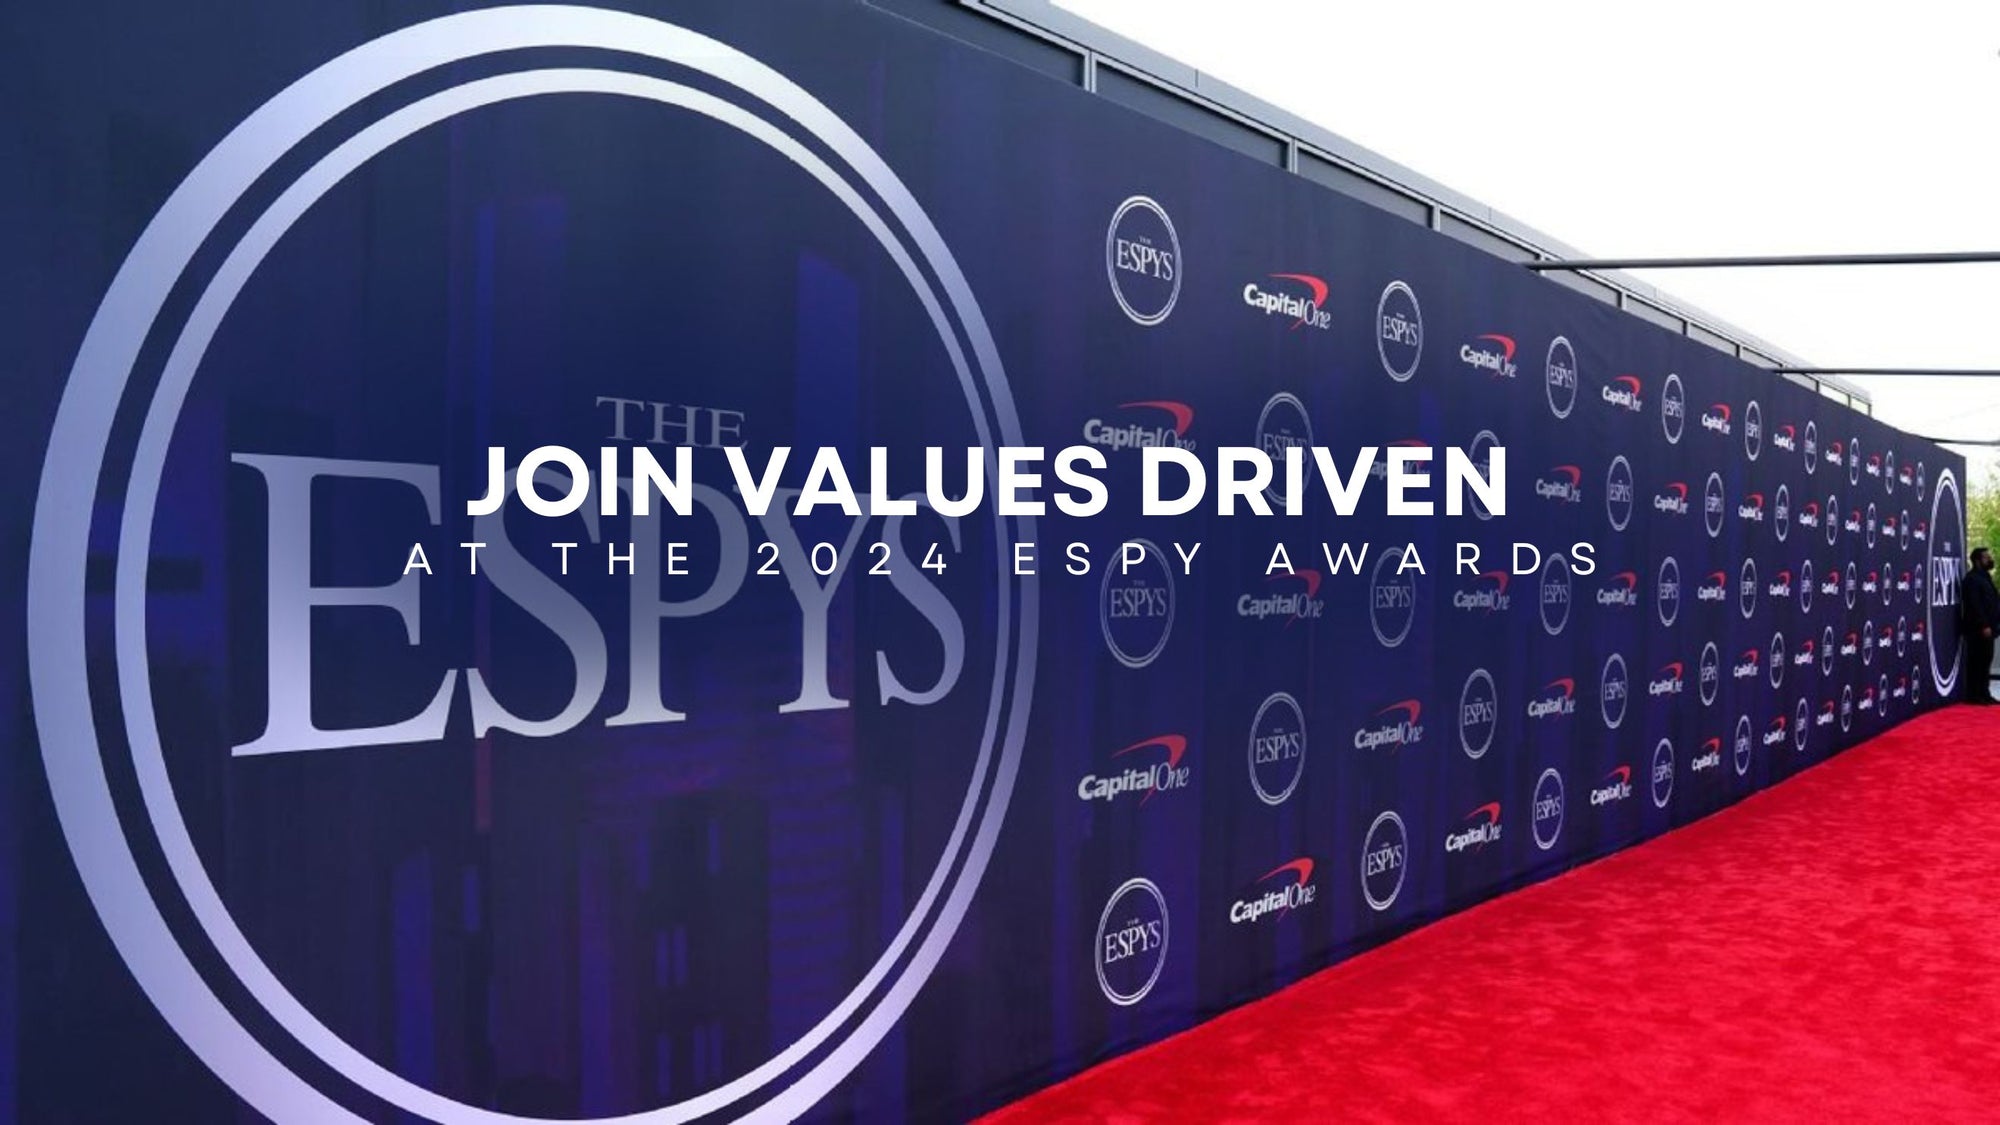 Join Values Driven at the 2024 ESPY Awards